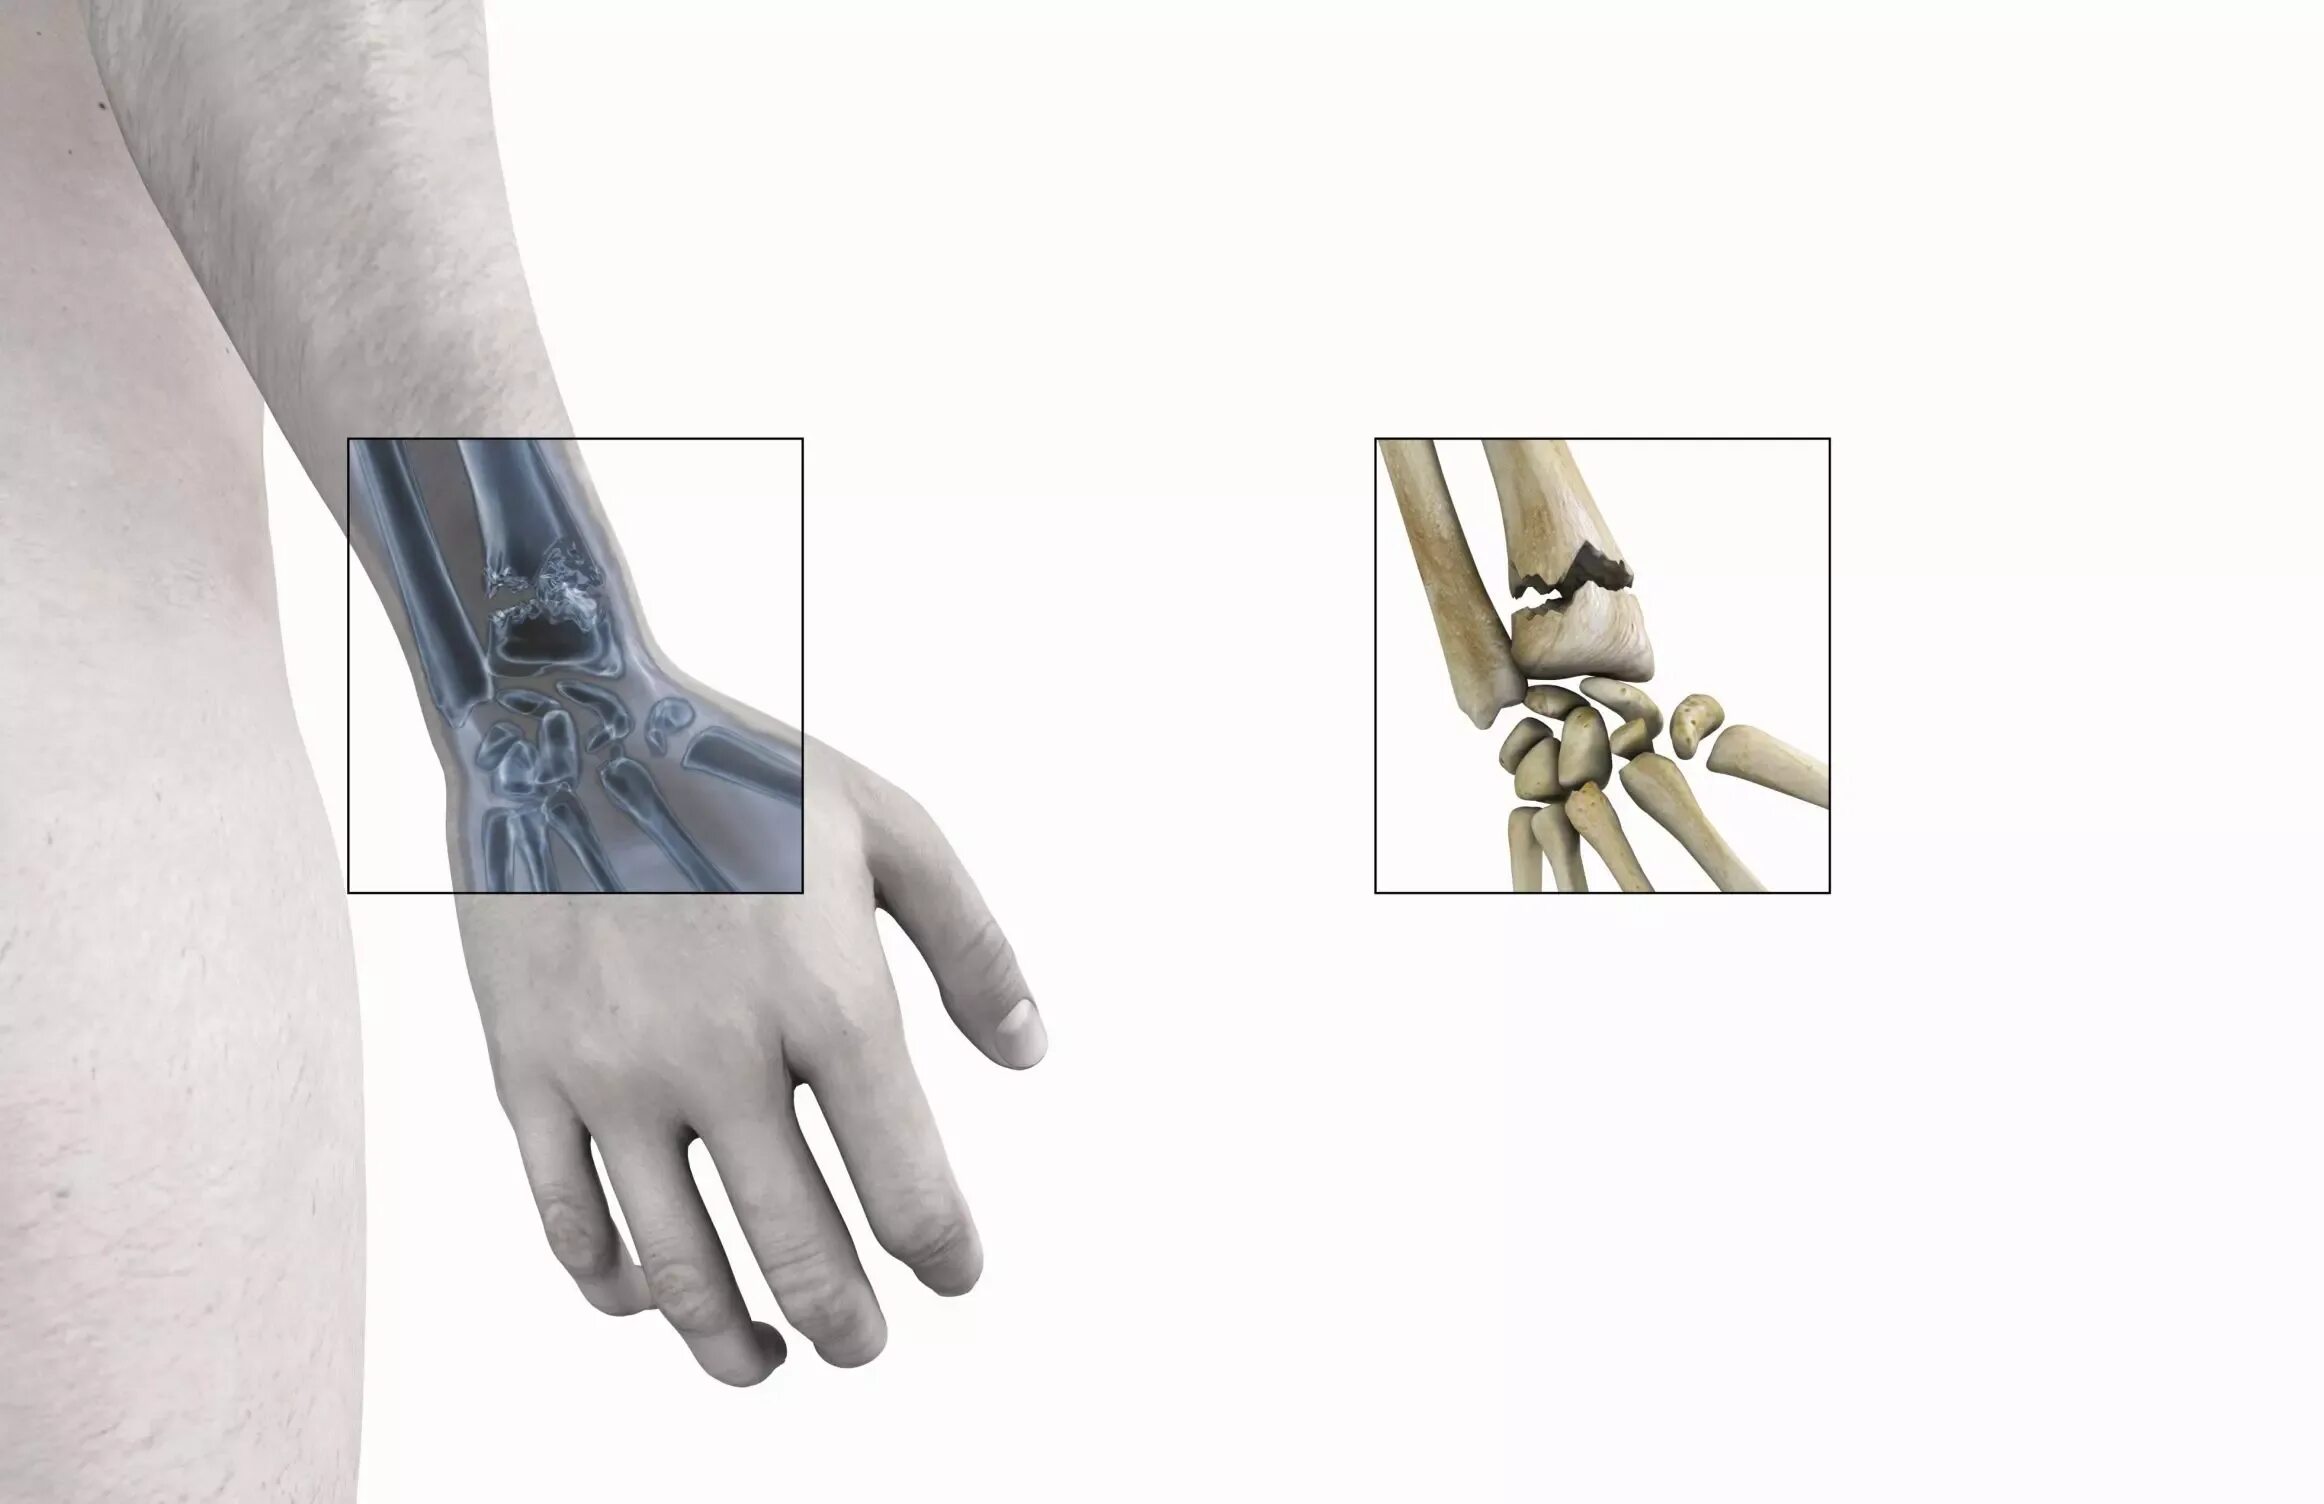 Перелом лучевой кости кисти. Перелом лучевой запястной кости. Перелом лучезапястного сустава рентген. Перелом ладьевидной кости кисти руки.